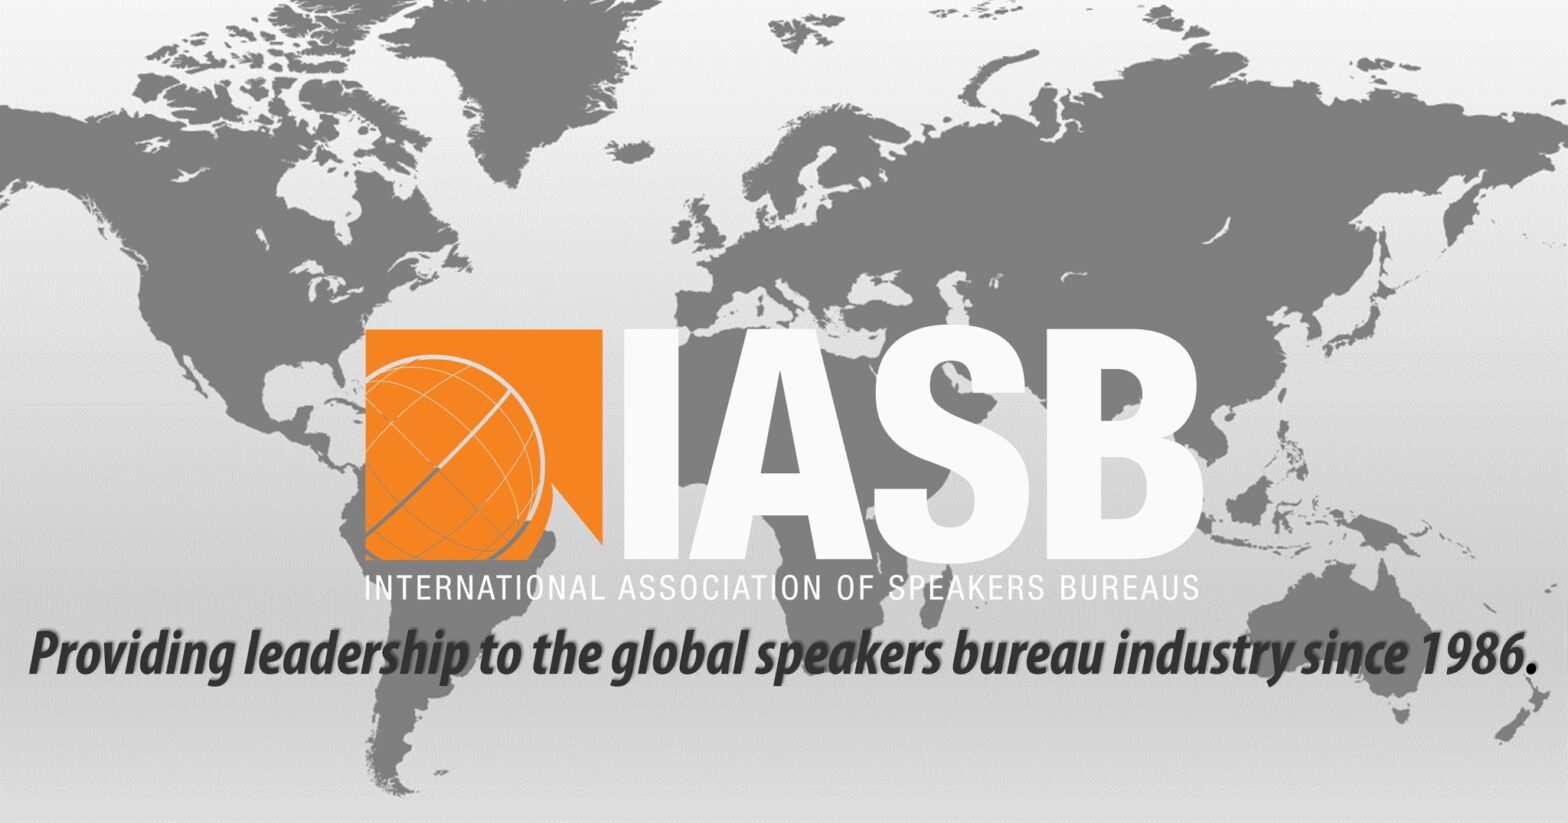 International Association of Speakers Bureaus